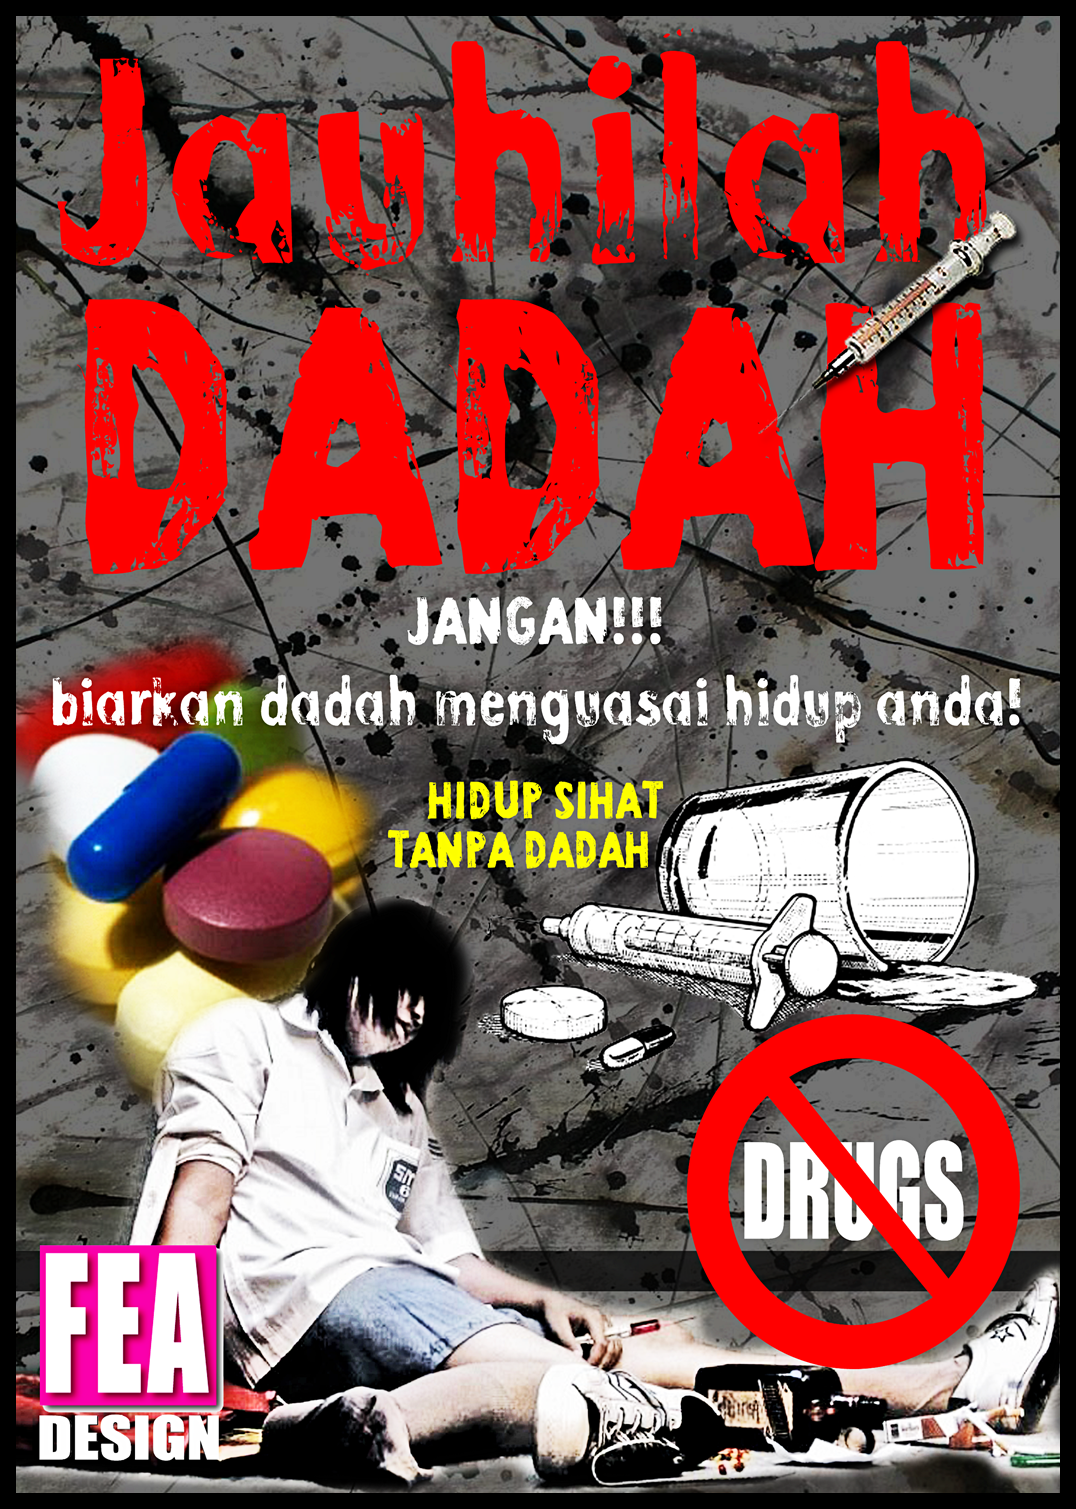 Contoh Gambar Poster Anti Dadah - Tweeter Directory